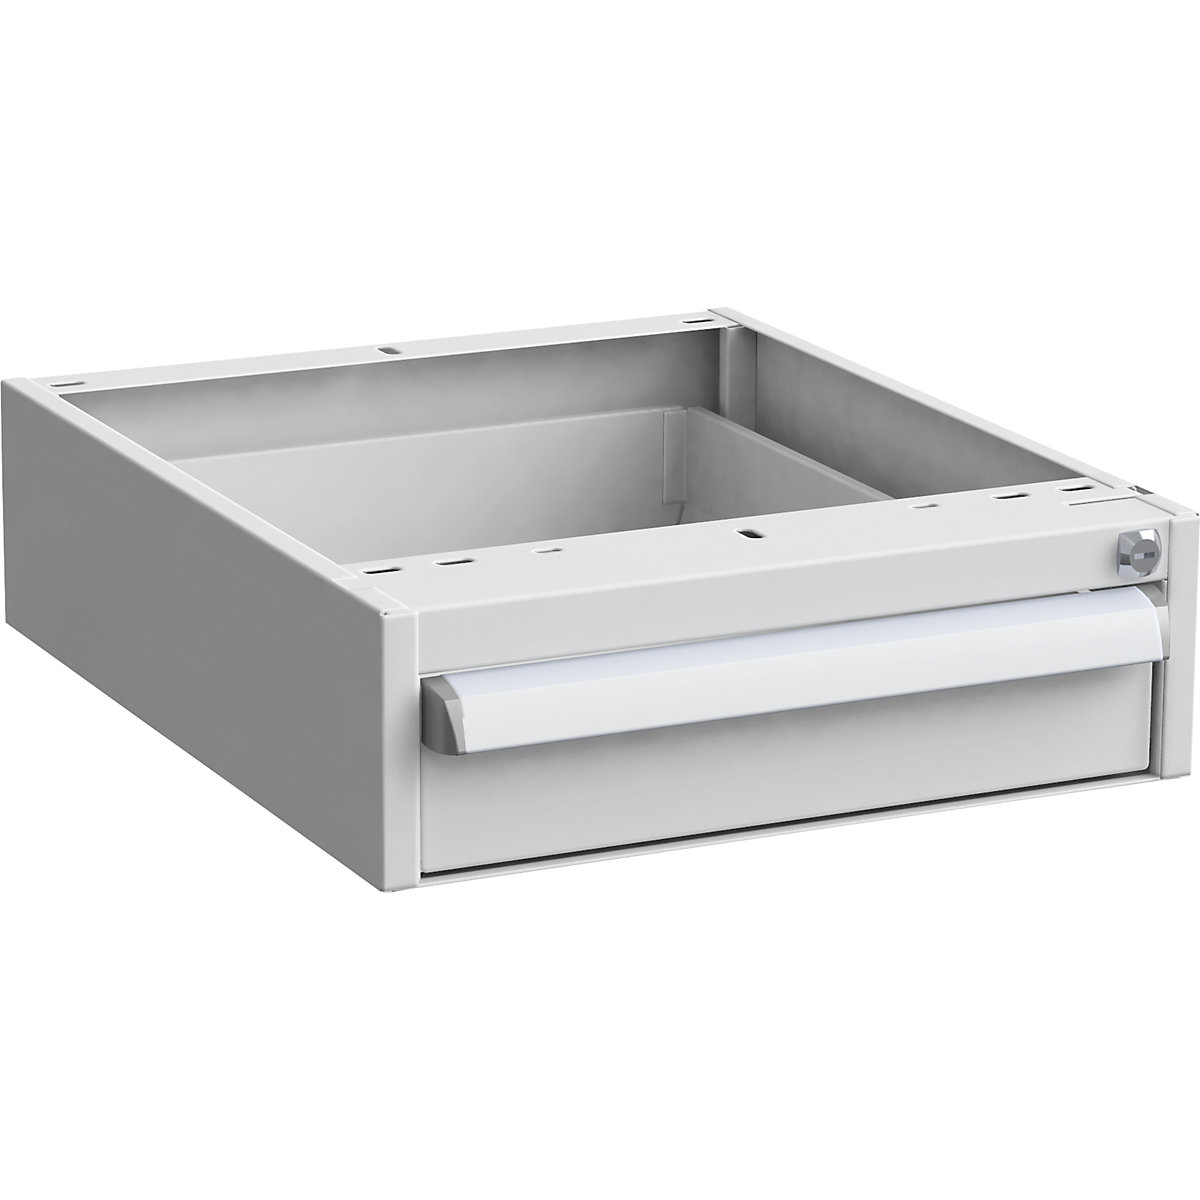 Suspended drawer unit - Treston